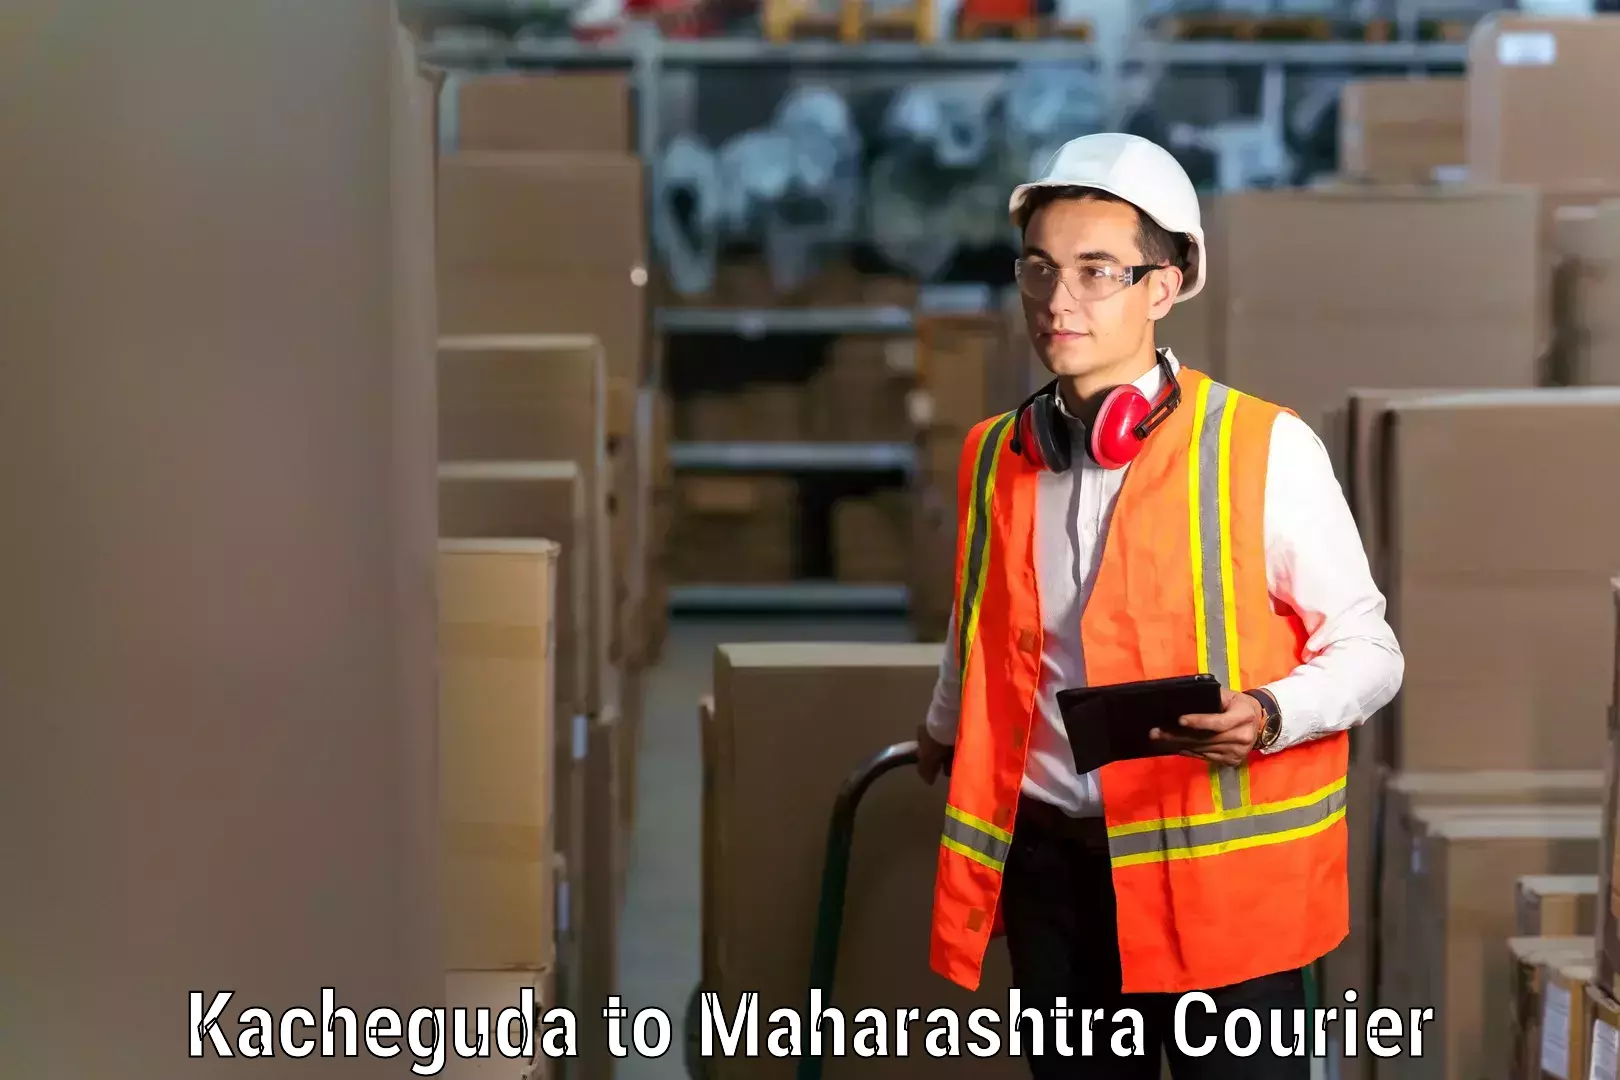 Efficient moving company Kacheguda to Pune